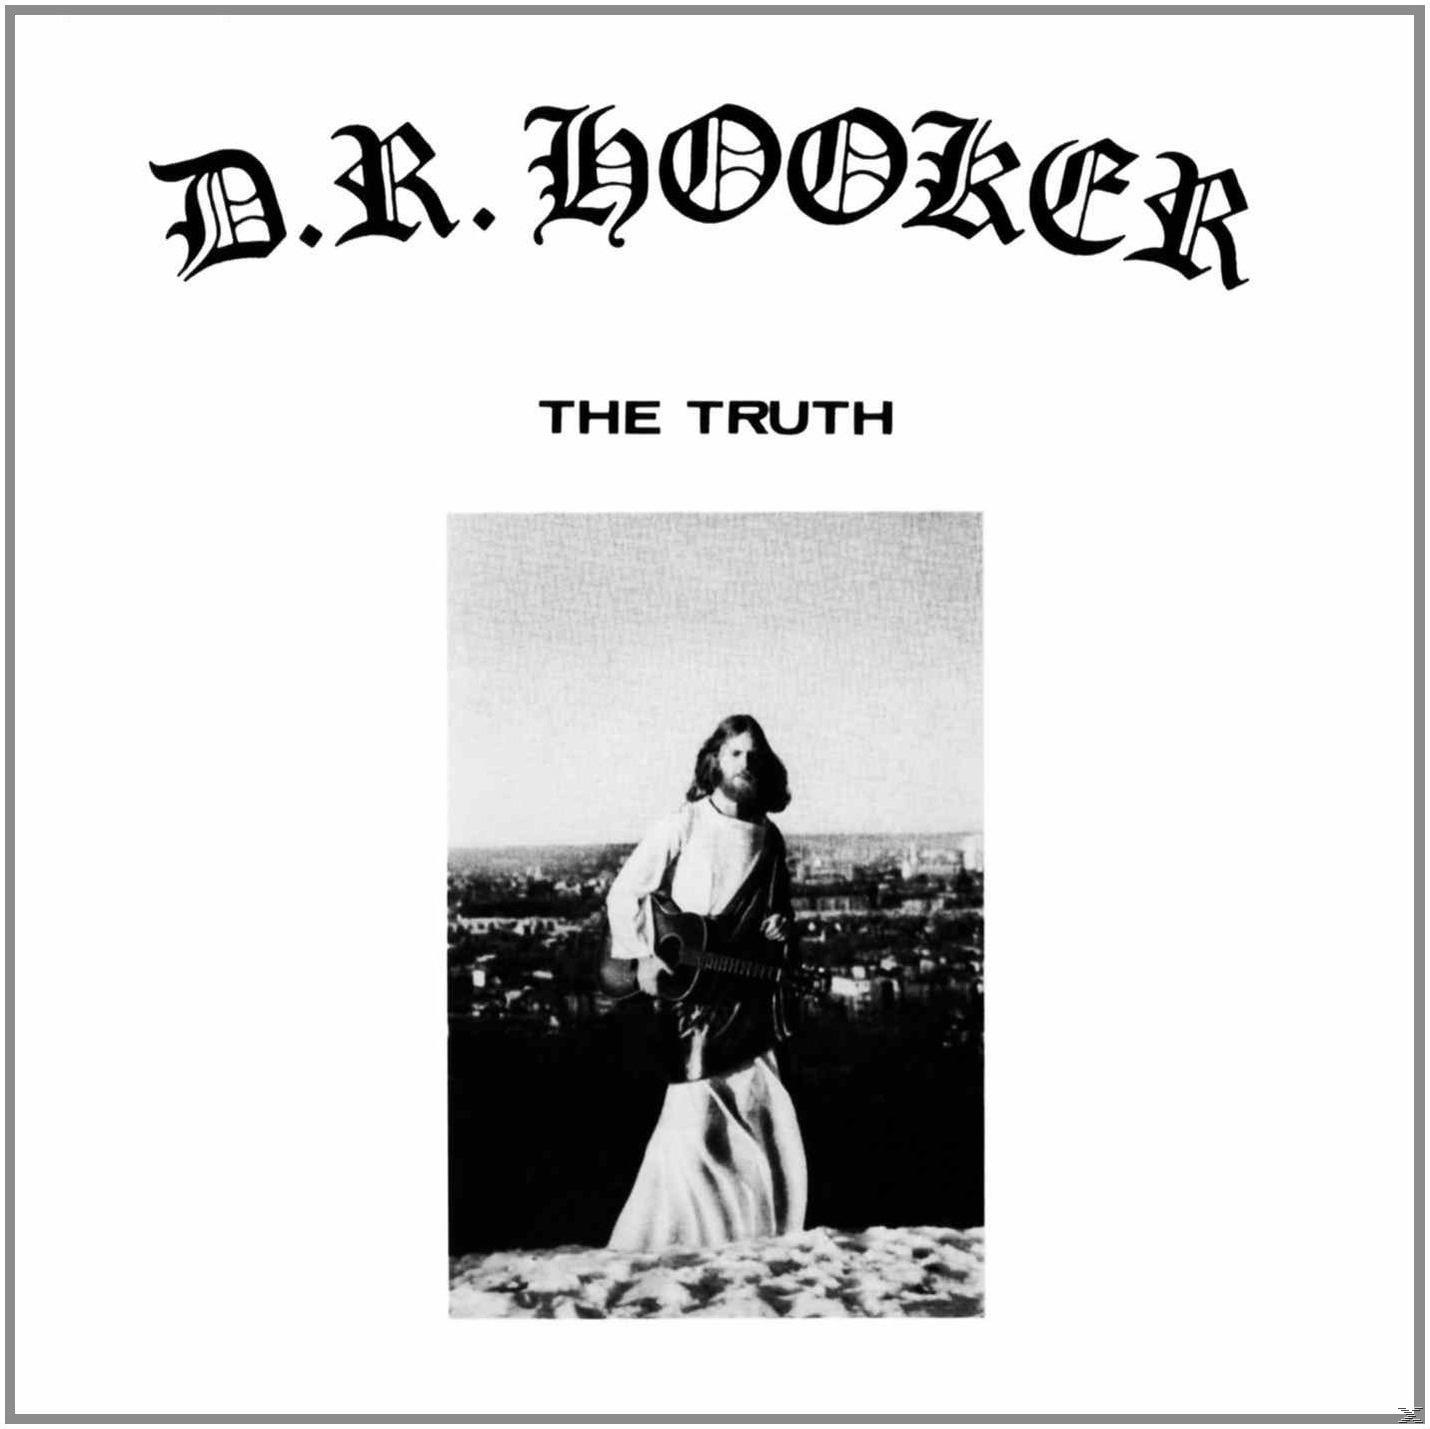 - (CD) Truth - D.R.Hooker The